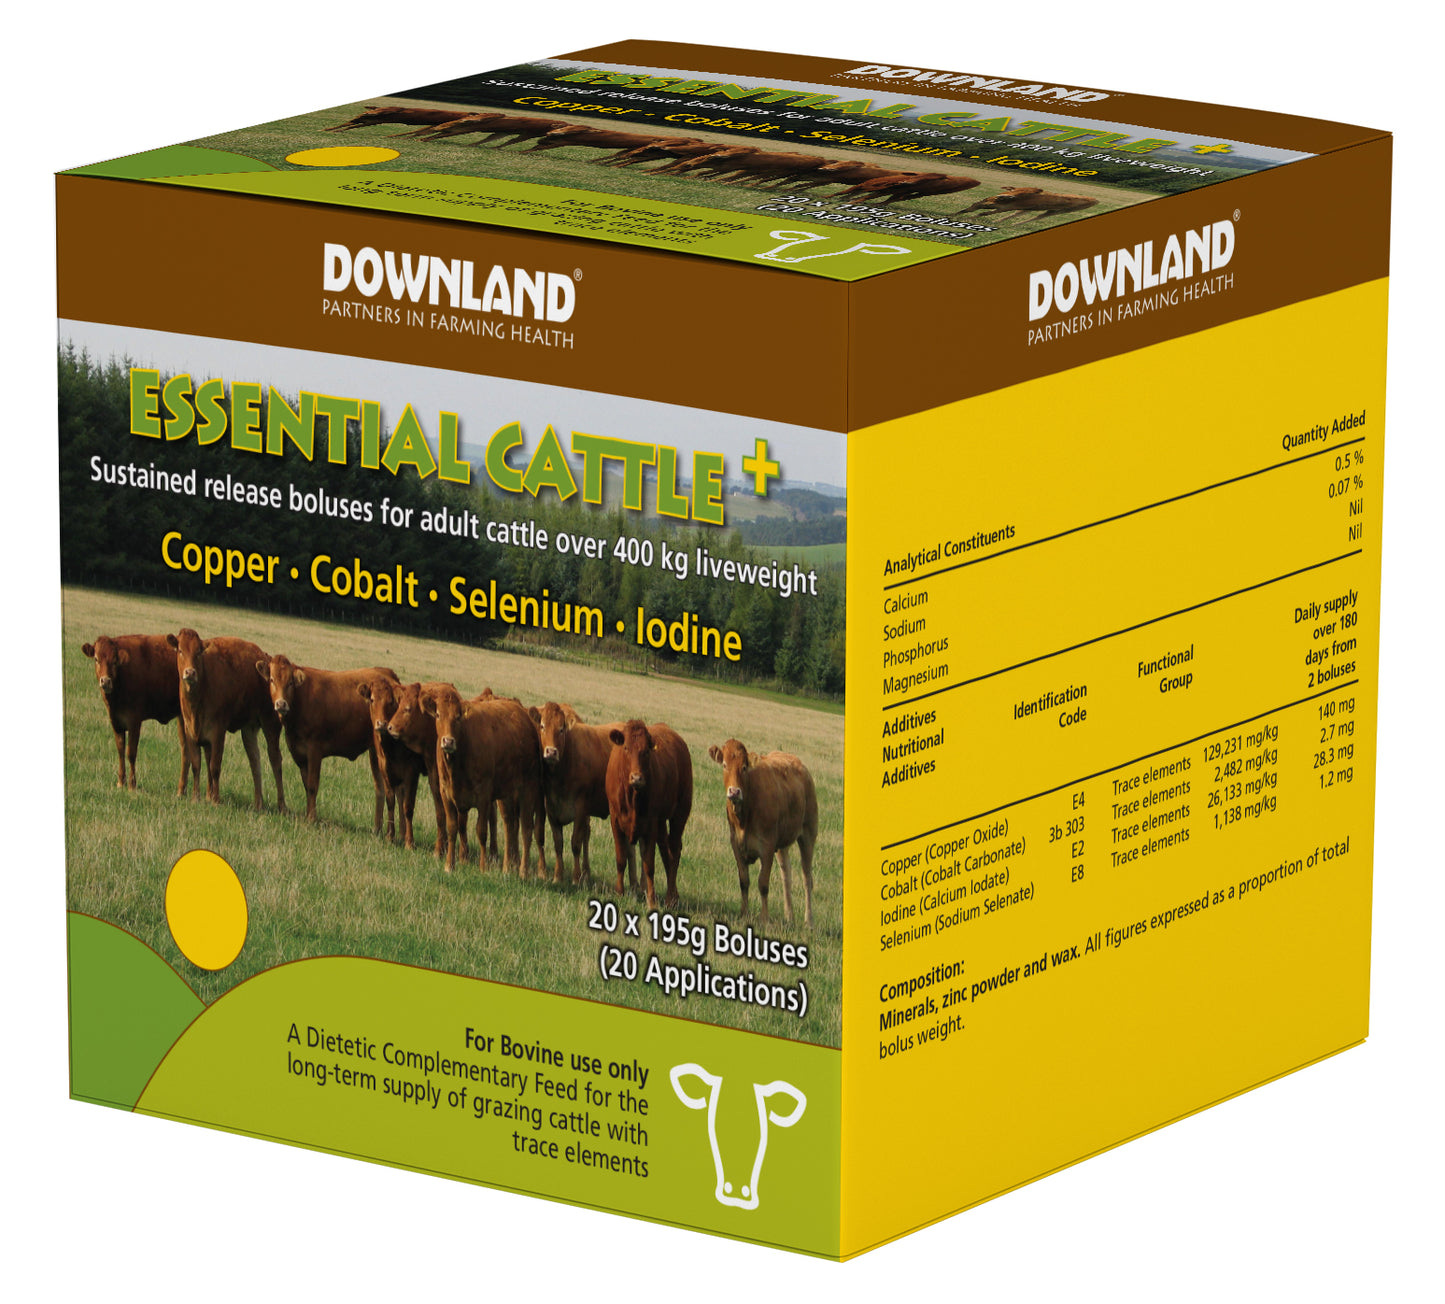 Downland Essential Cattle+